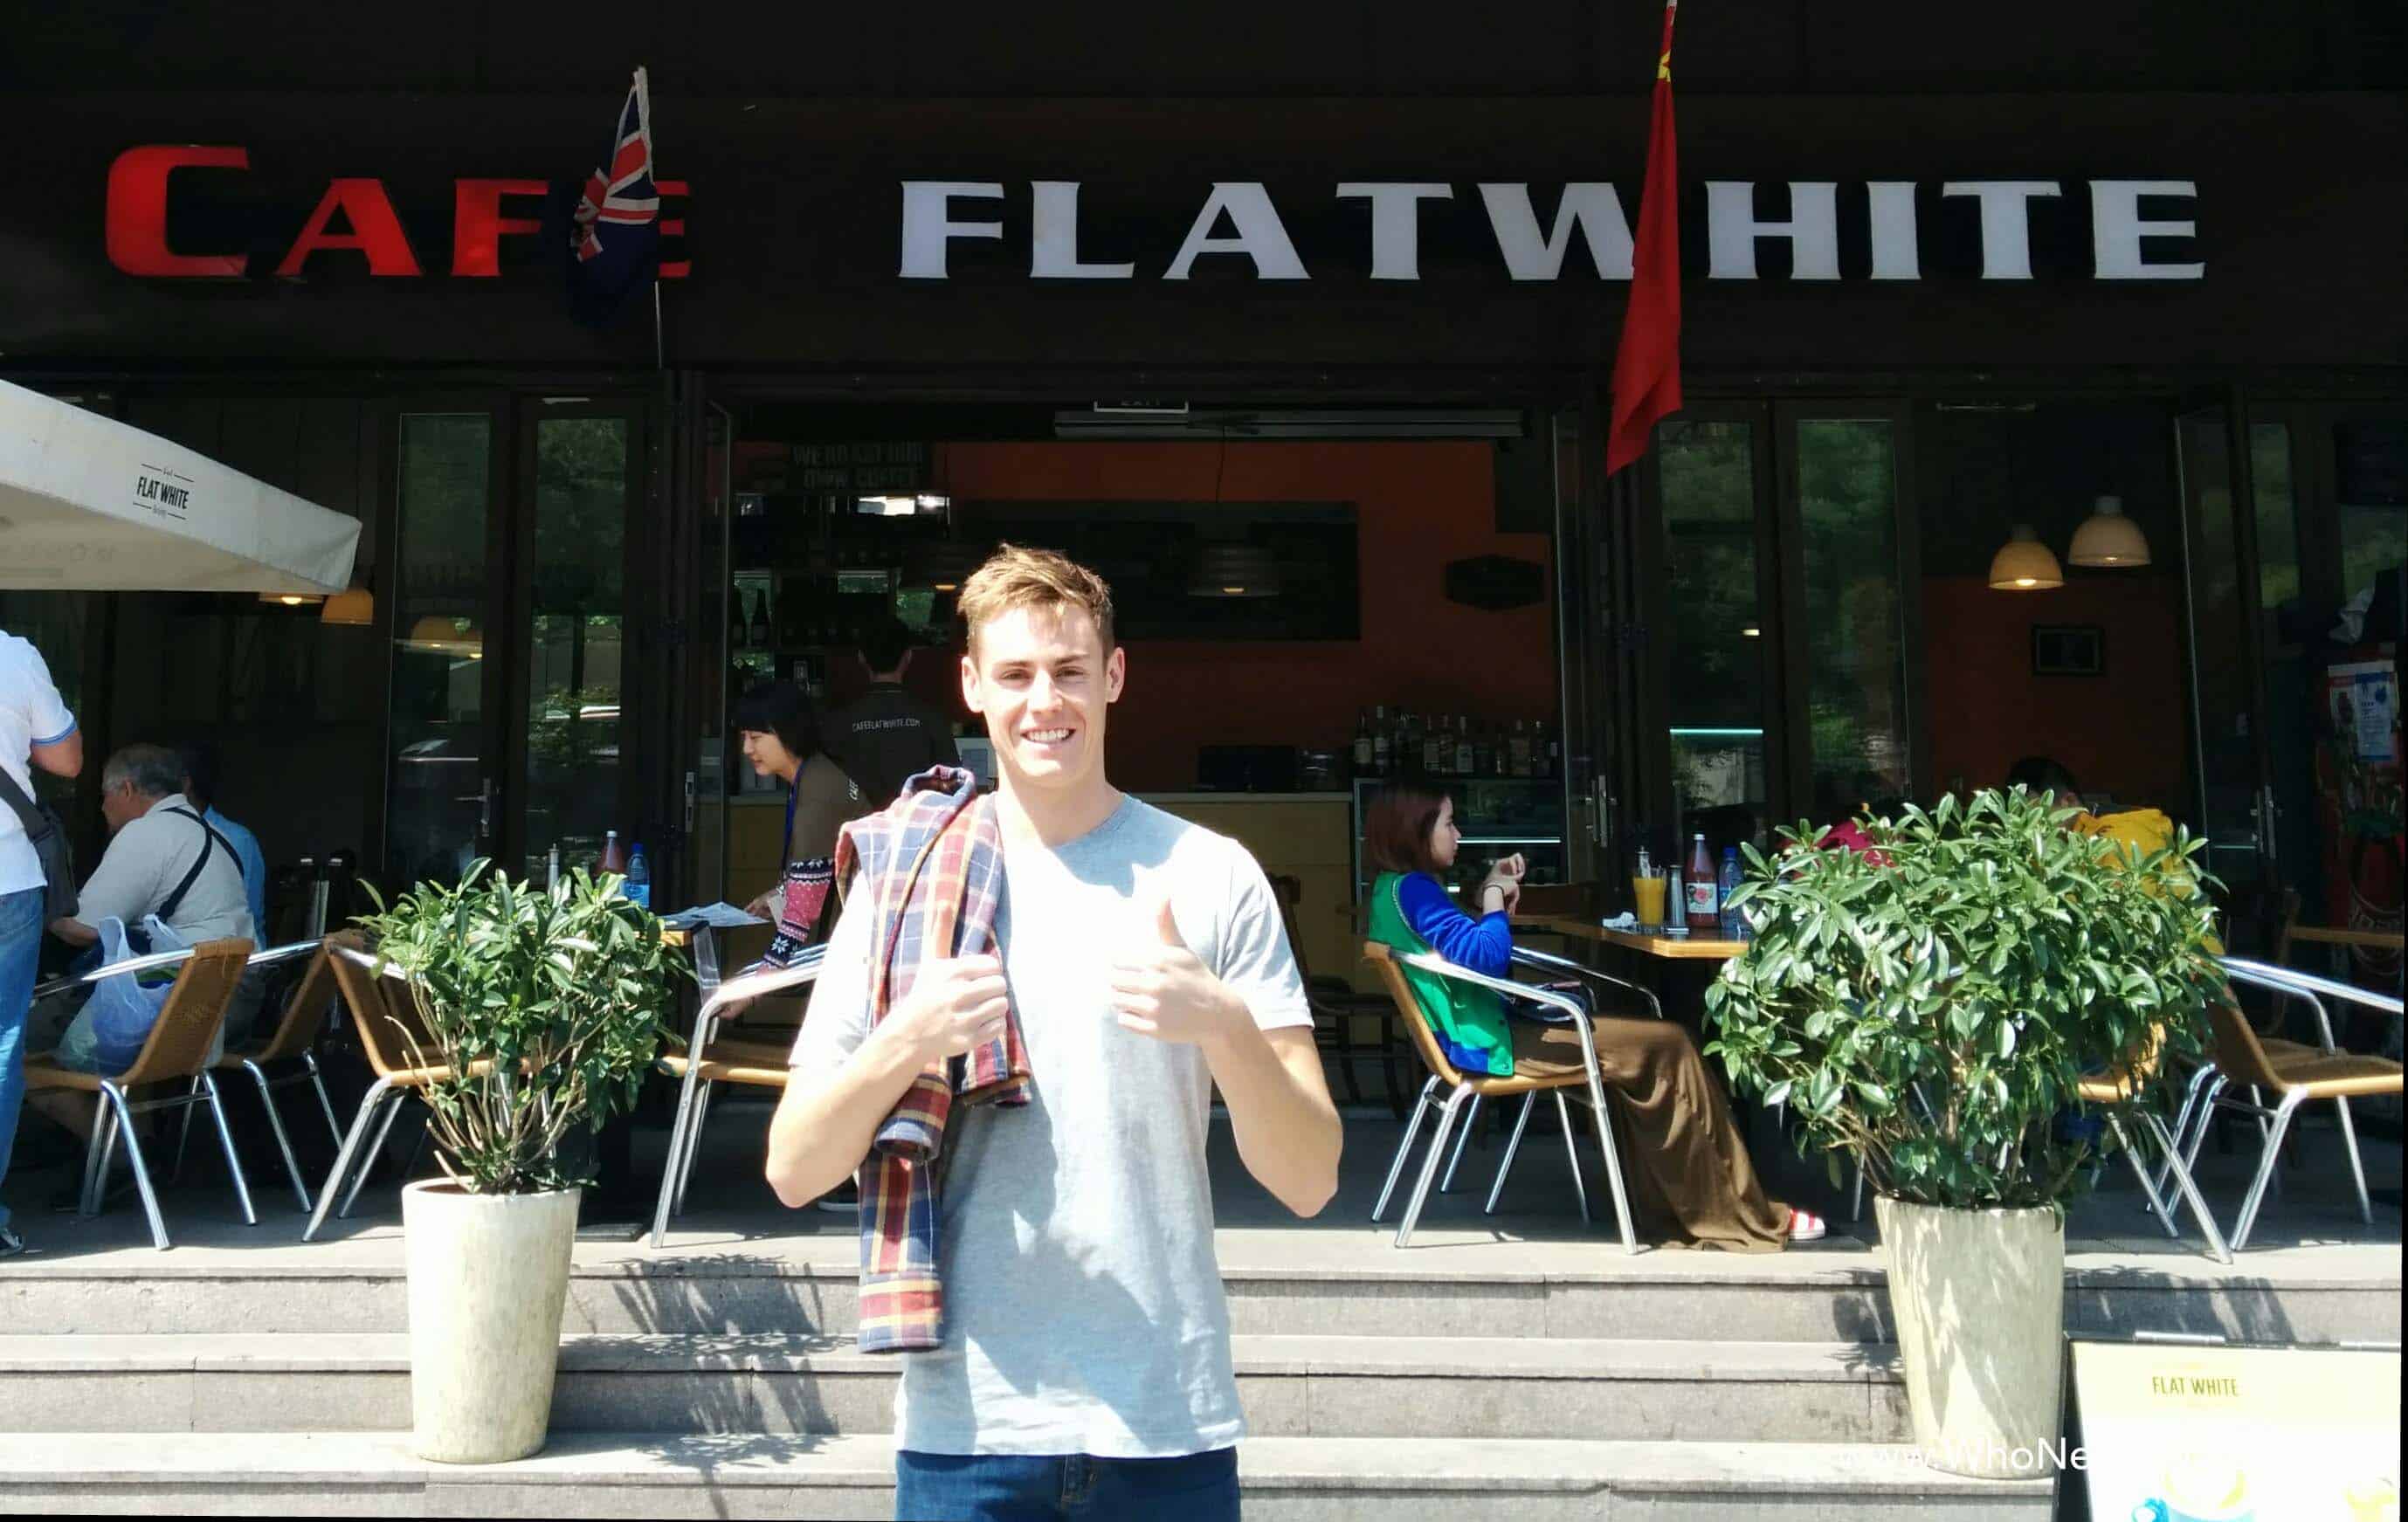 Cafe Flat White - dating an australian 